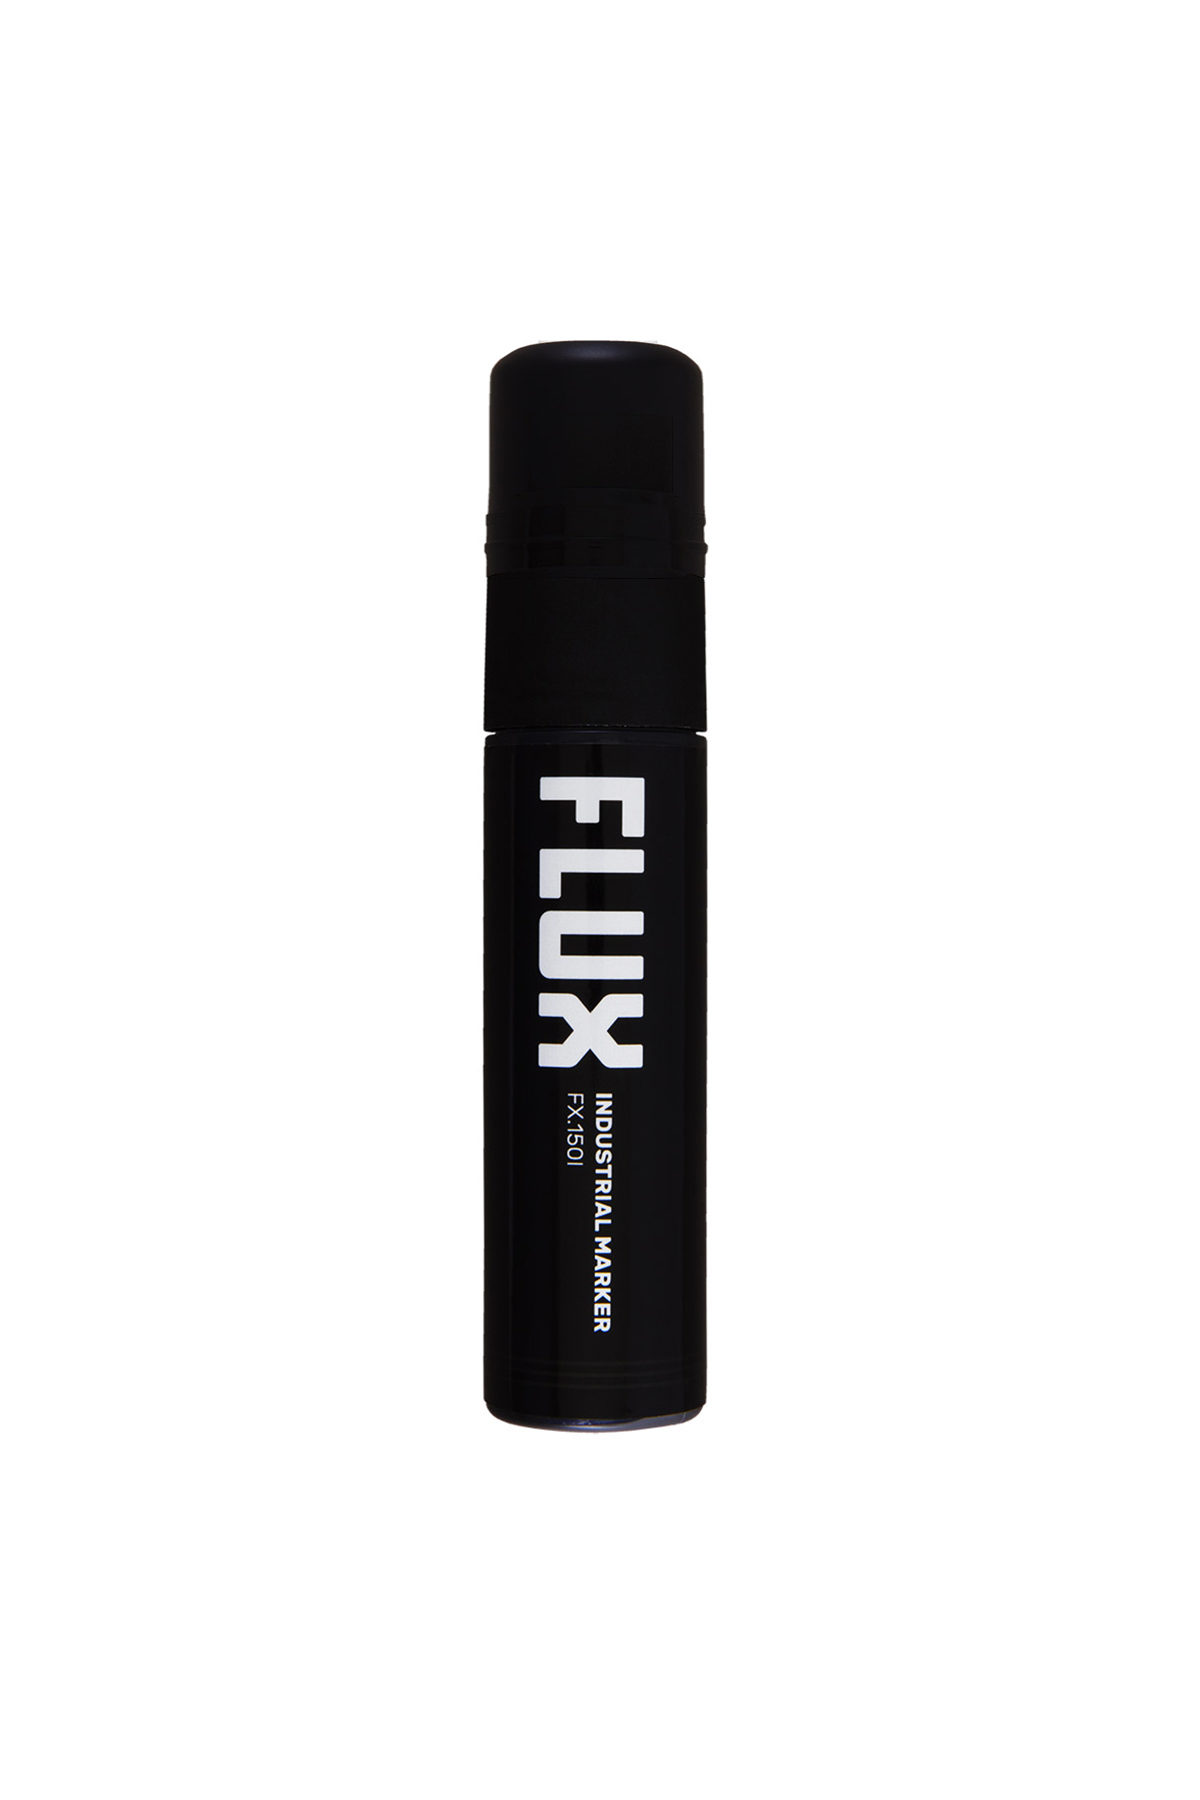 Flux INDUSTRIAL Marker 15mm